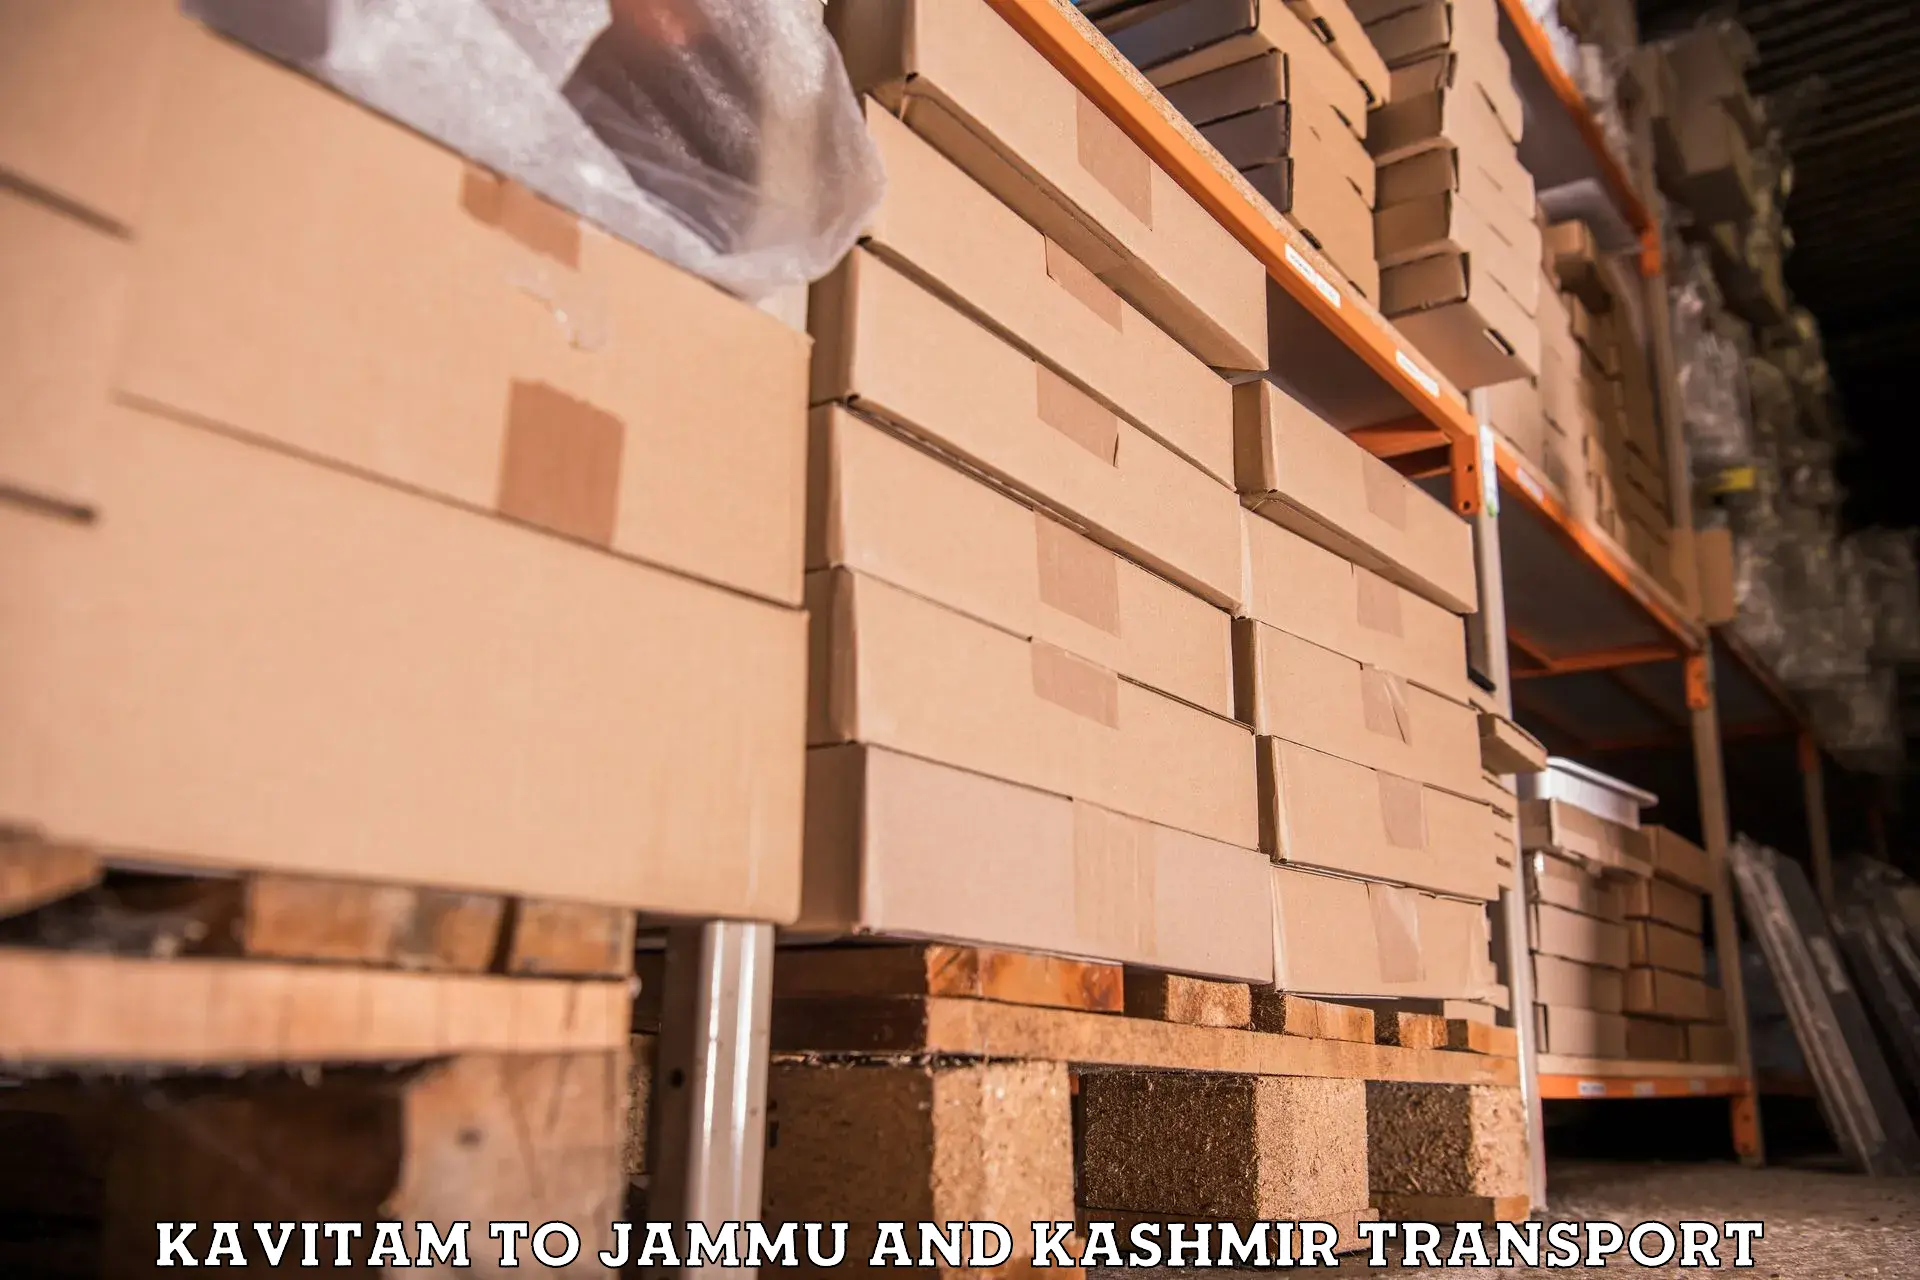 Daily transport service Kavitam to Jammu and Kashmir